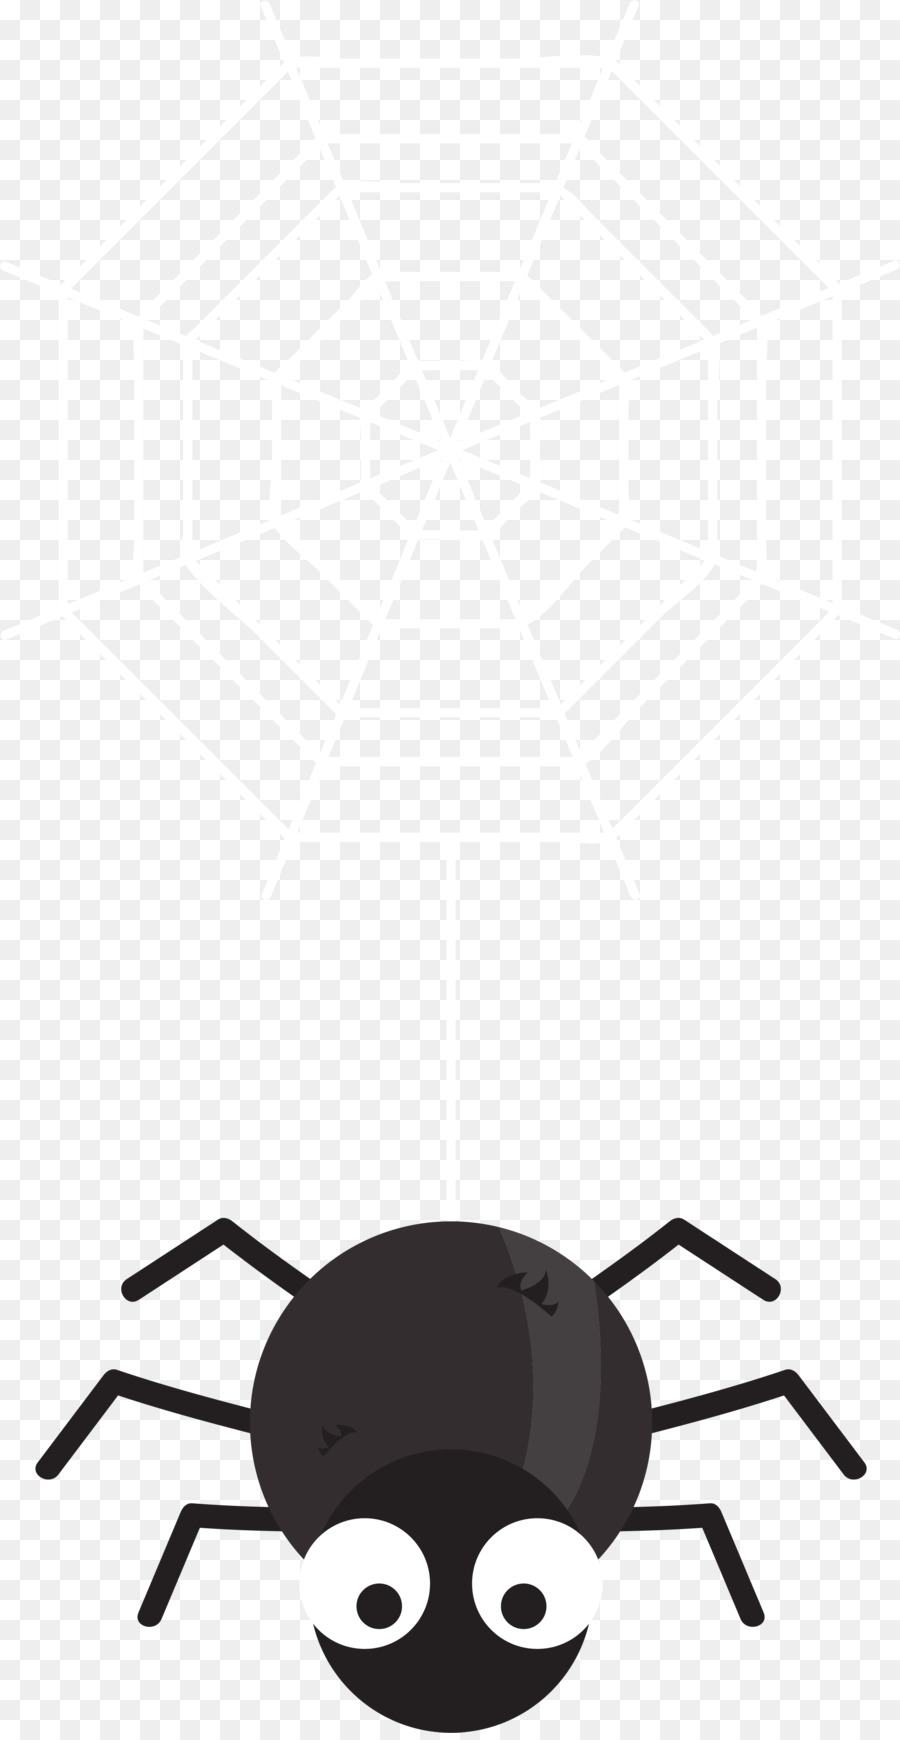 Spider web Black house spider - Cartoon Black Witch Hat png download - 2211*4257 - Free Transparent Spider png Download.